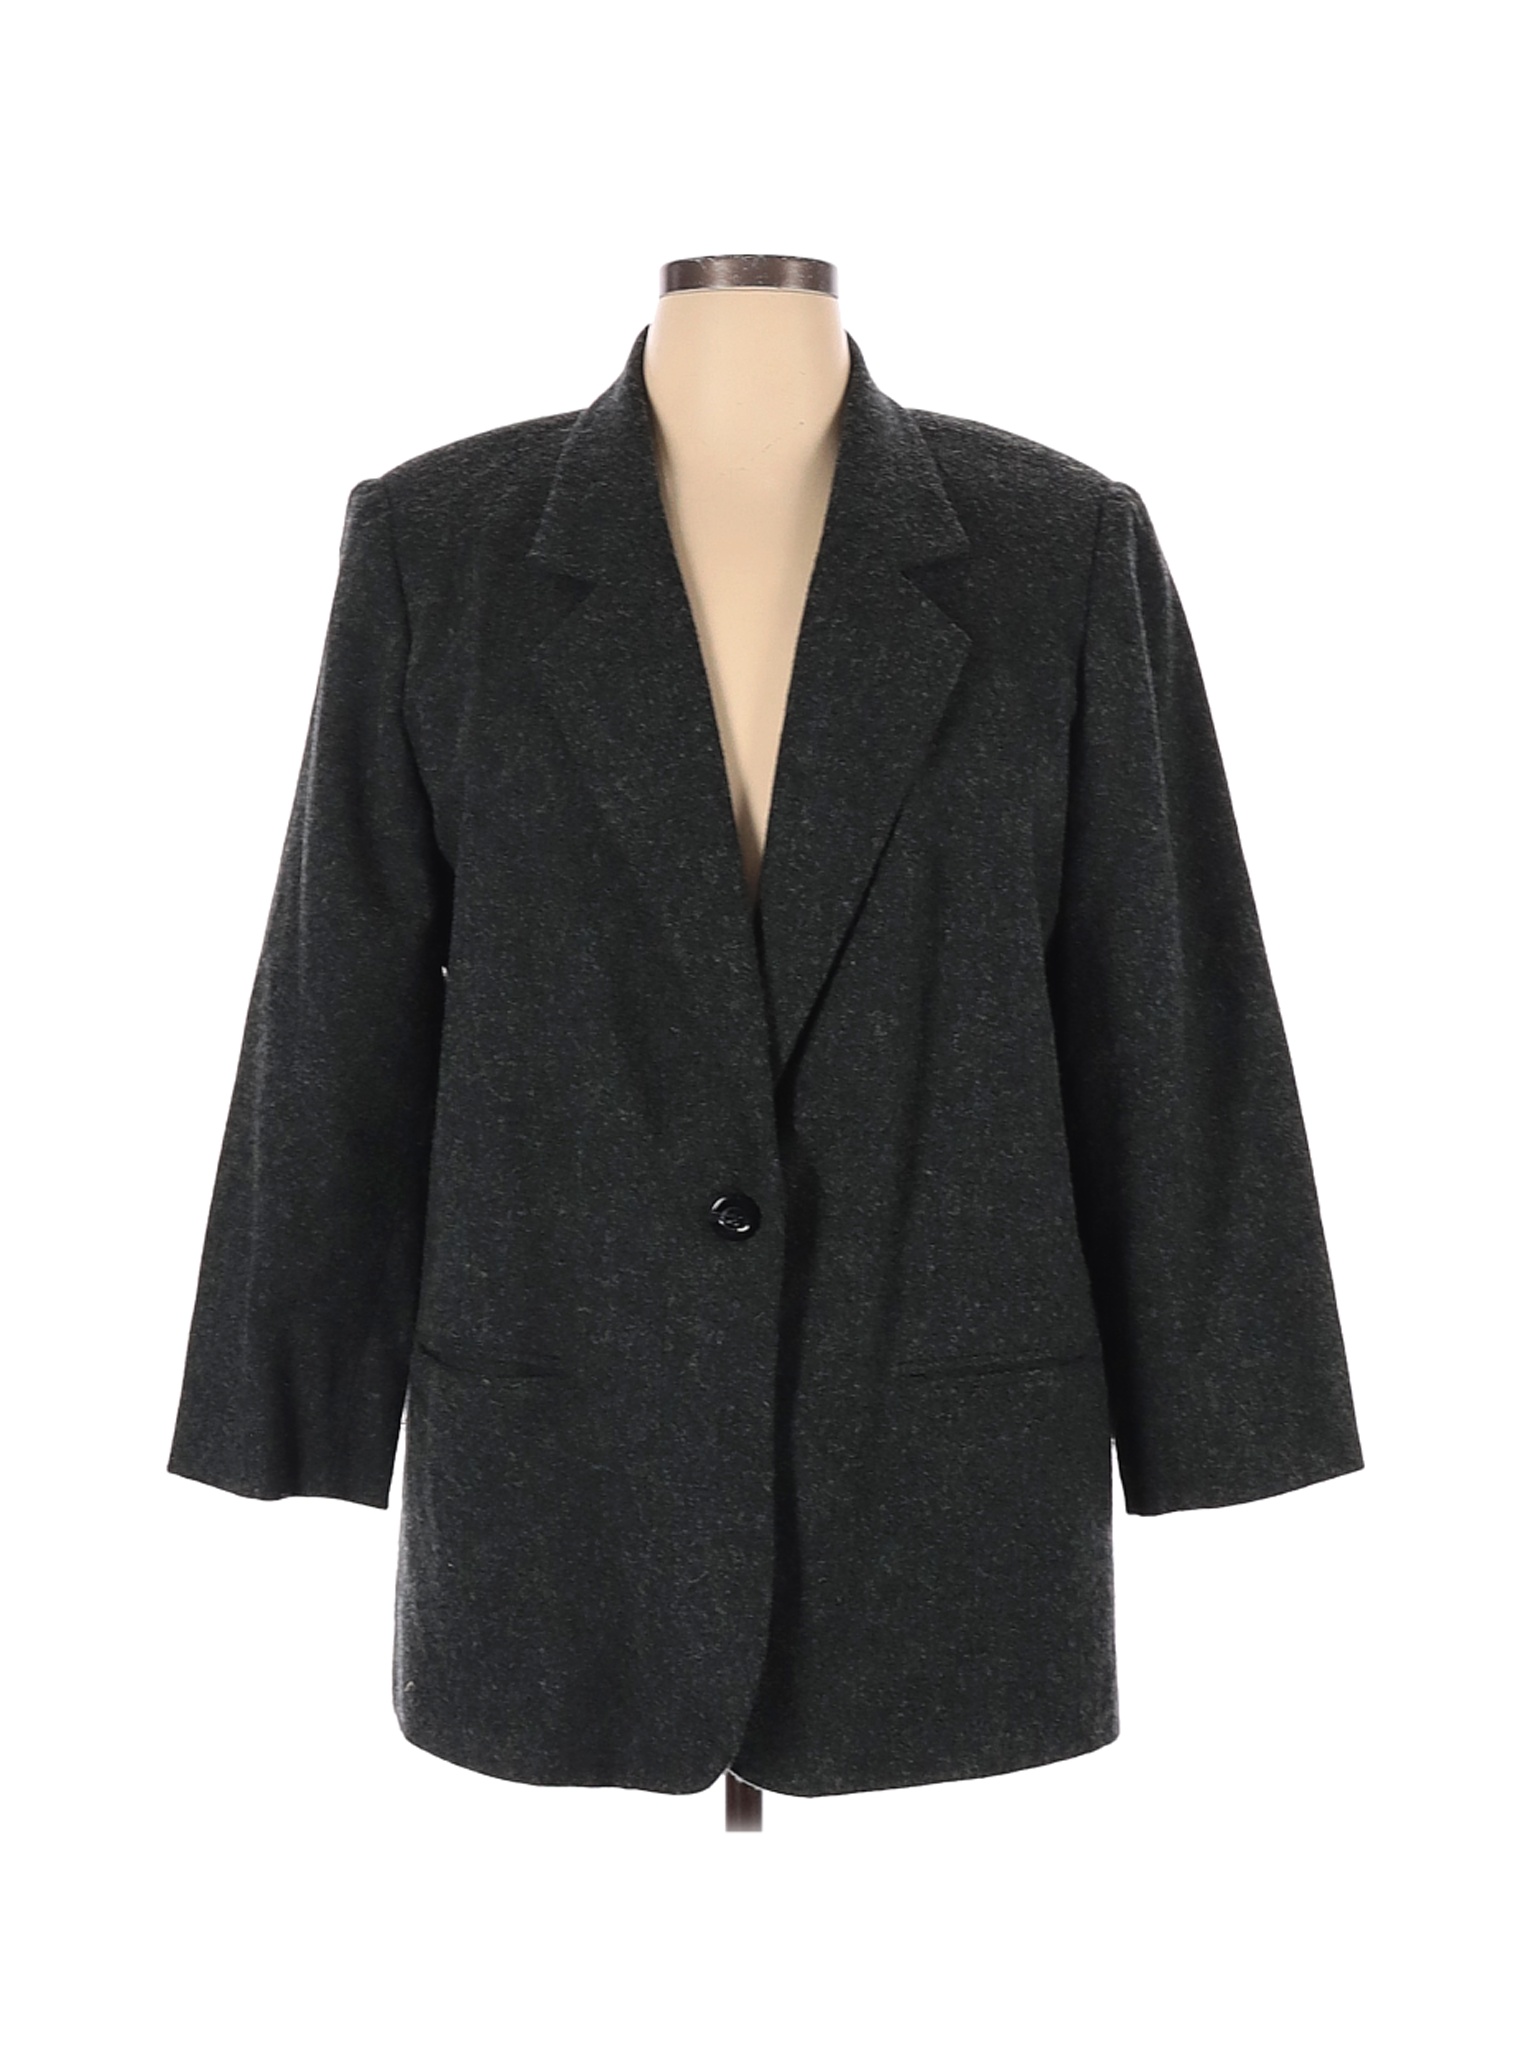 Sag Harbor Women Black Wool Blazer 16 Plus | eBay